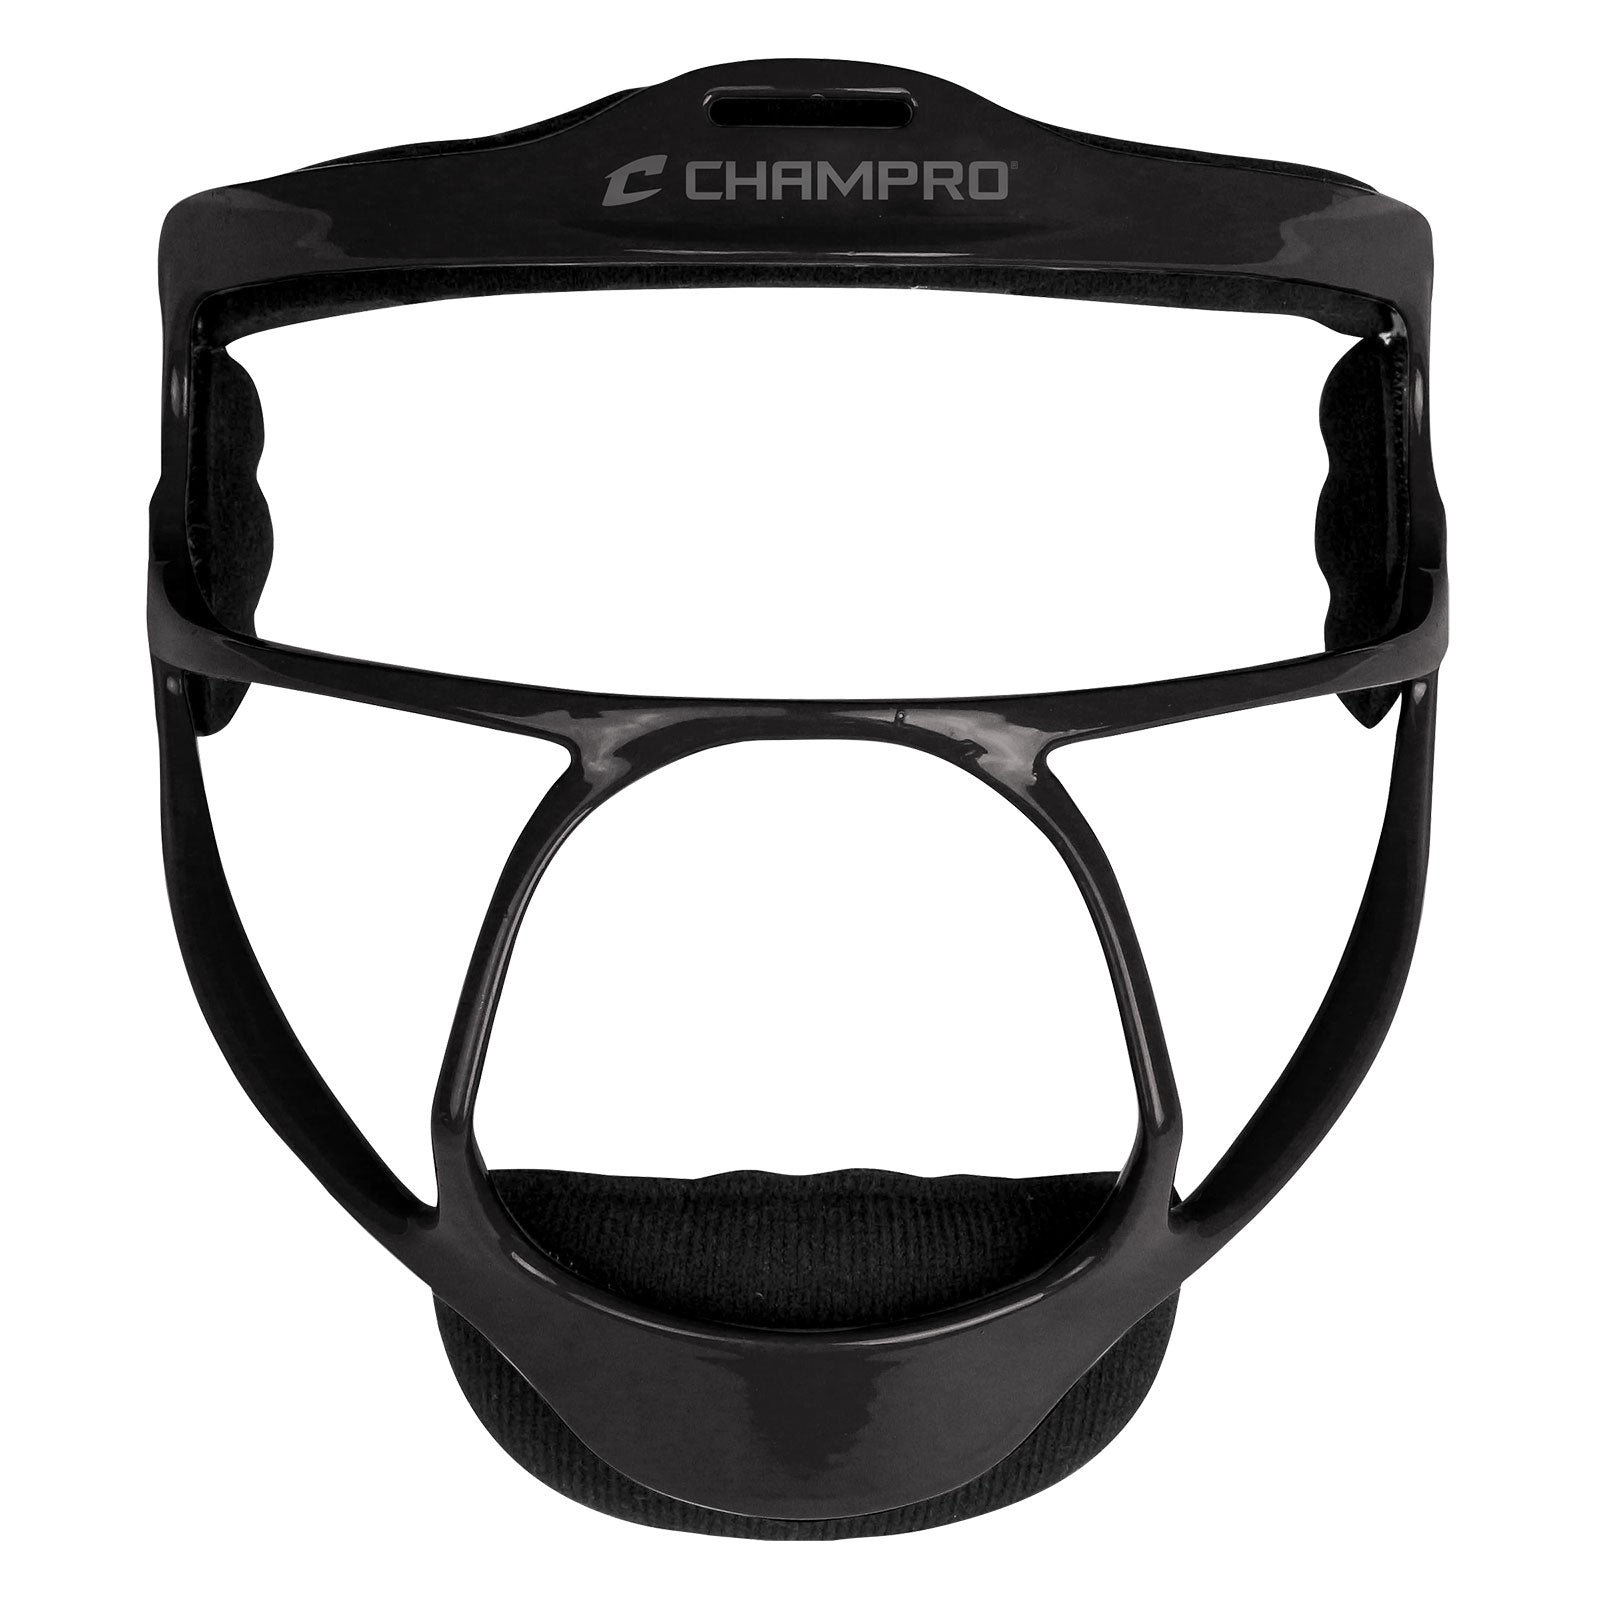 Champro Rampage Softball Fielders Face Mask - Adult Black